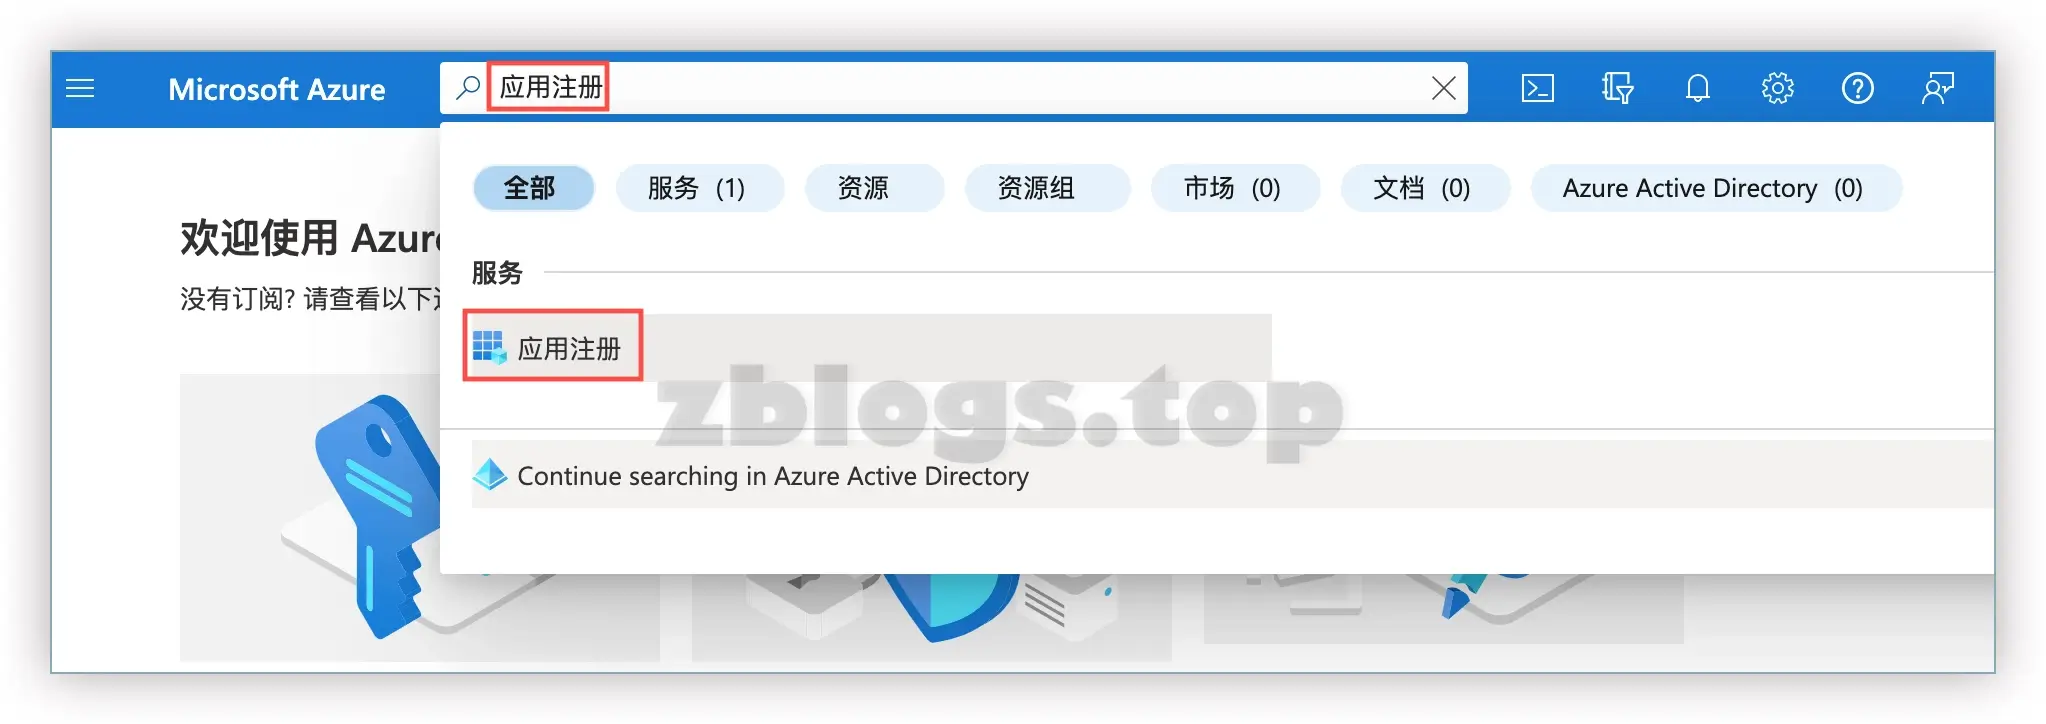 Azure Active Directory 应用注册